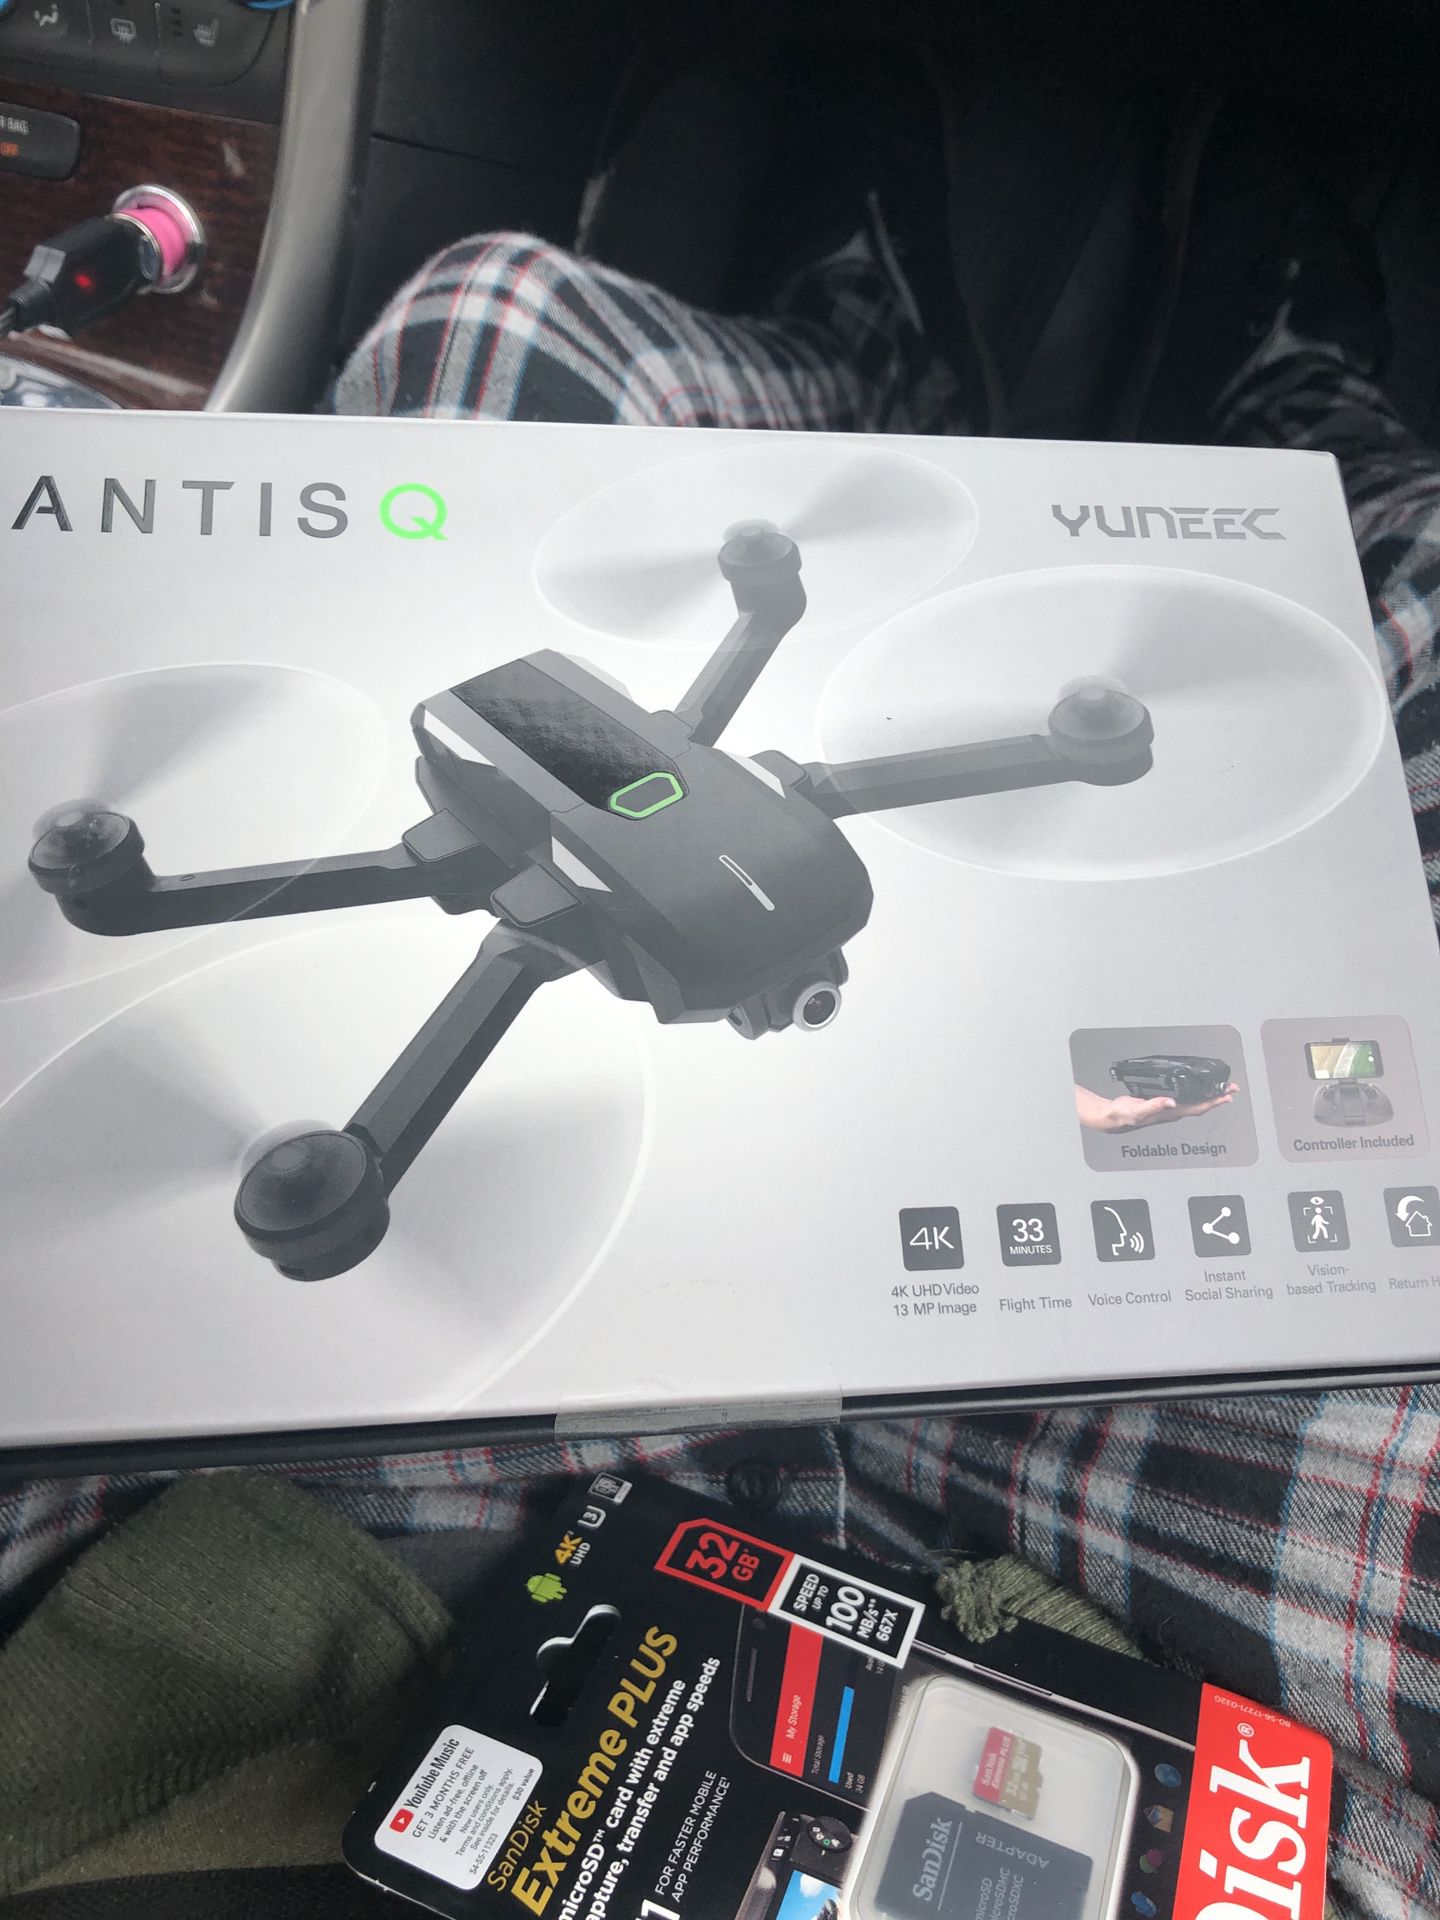 New in box Yuneec Mantis Q quad copter